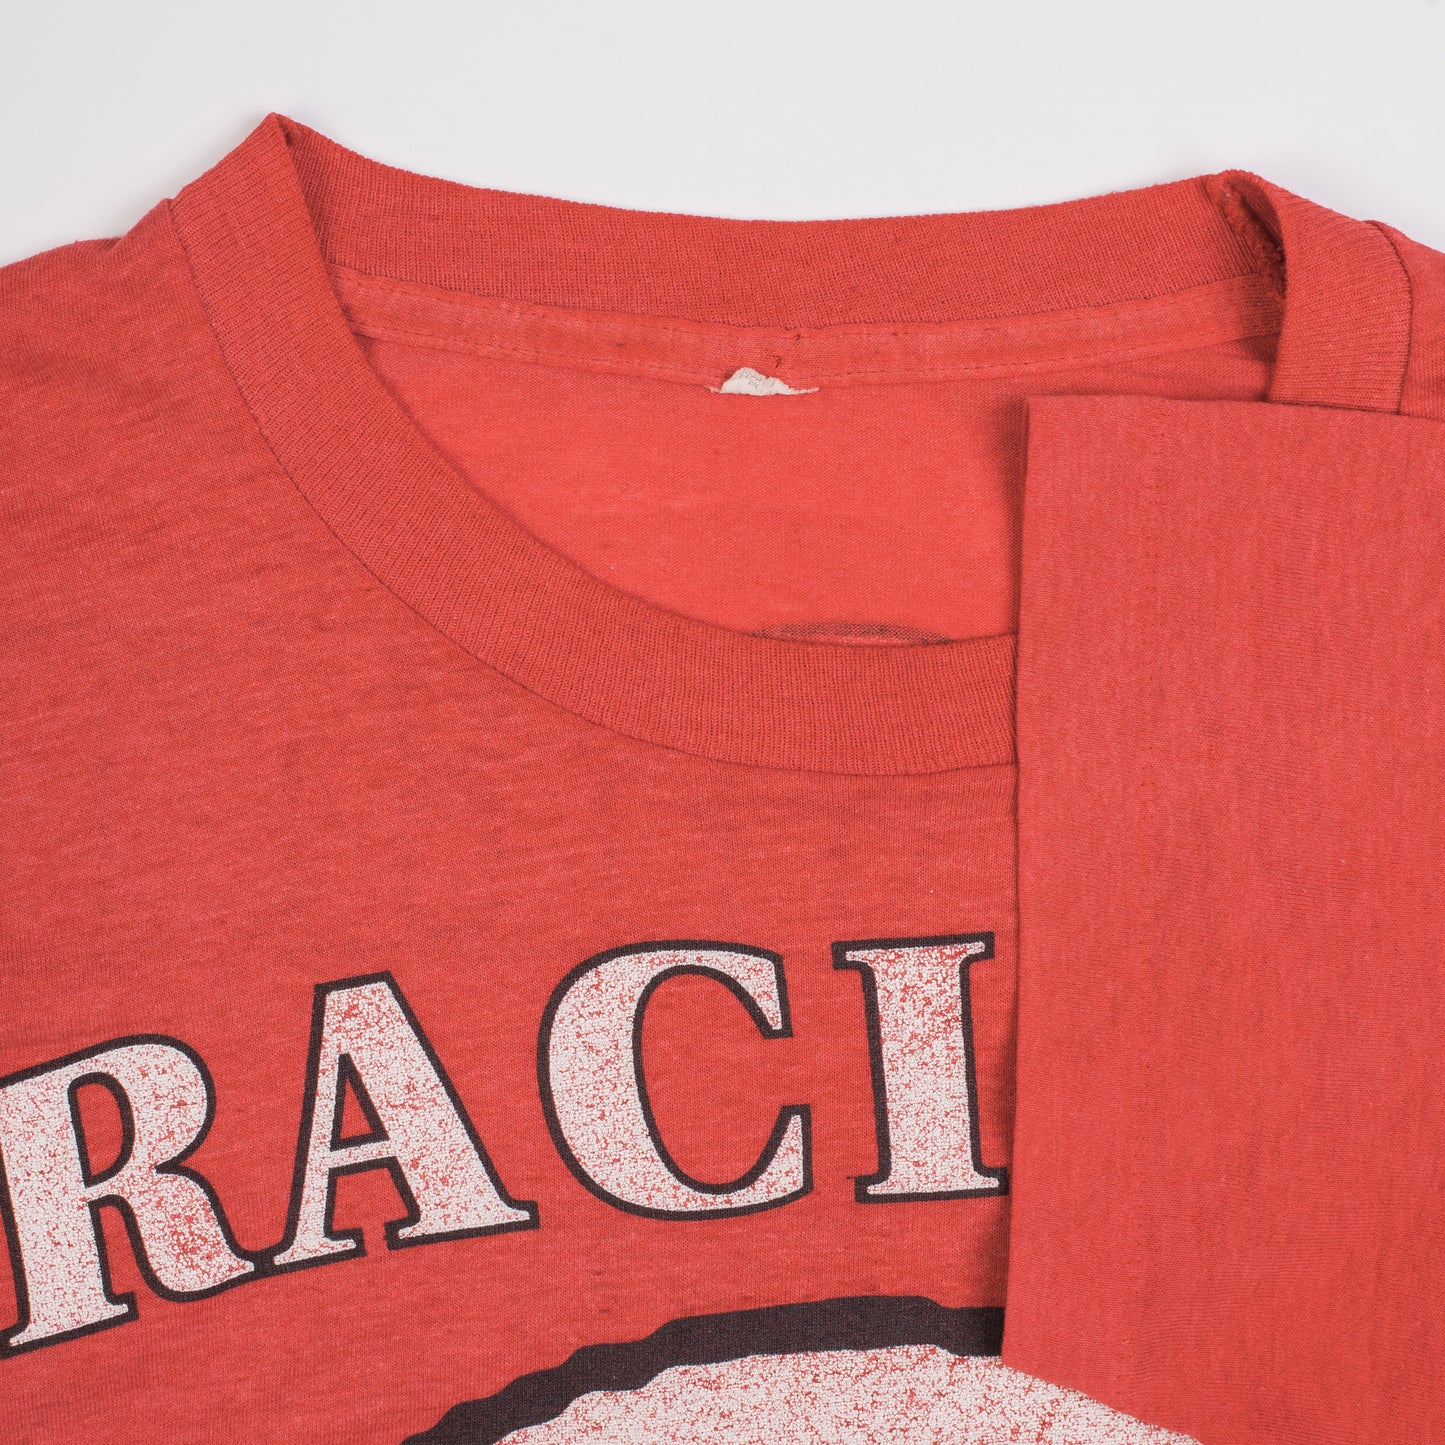 Vintage 1991 Fishbone Racism Sucks T-Shirt – Mills Vintage USA